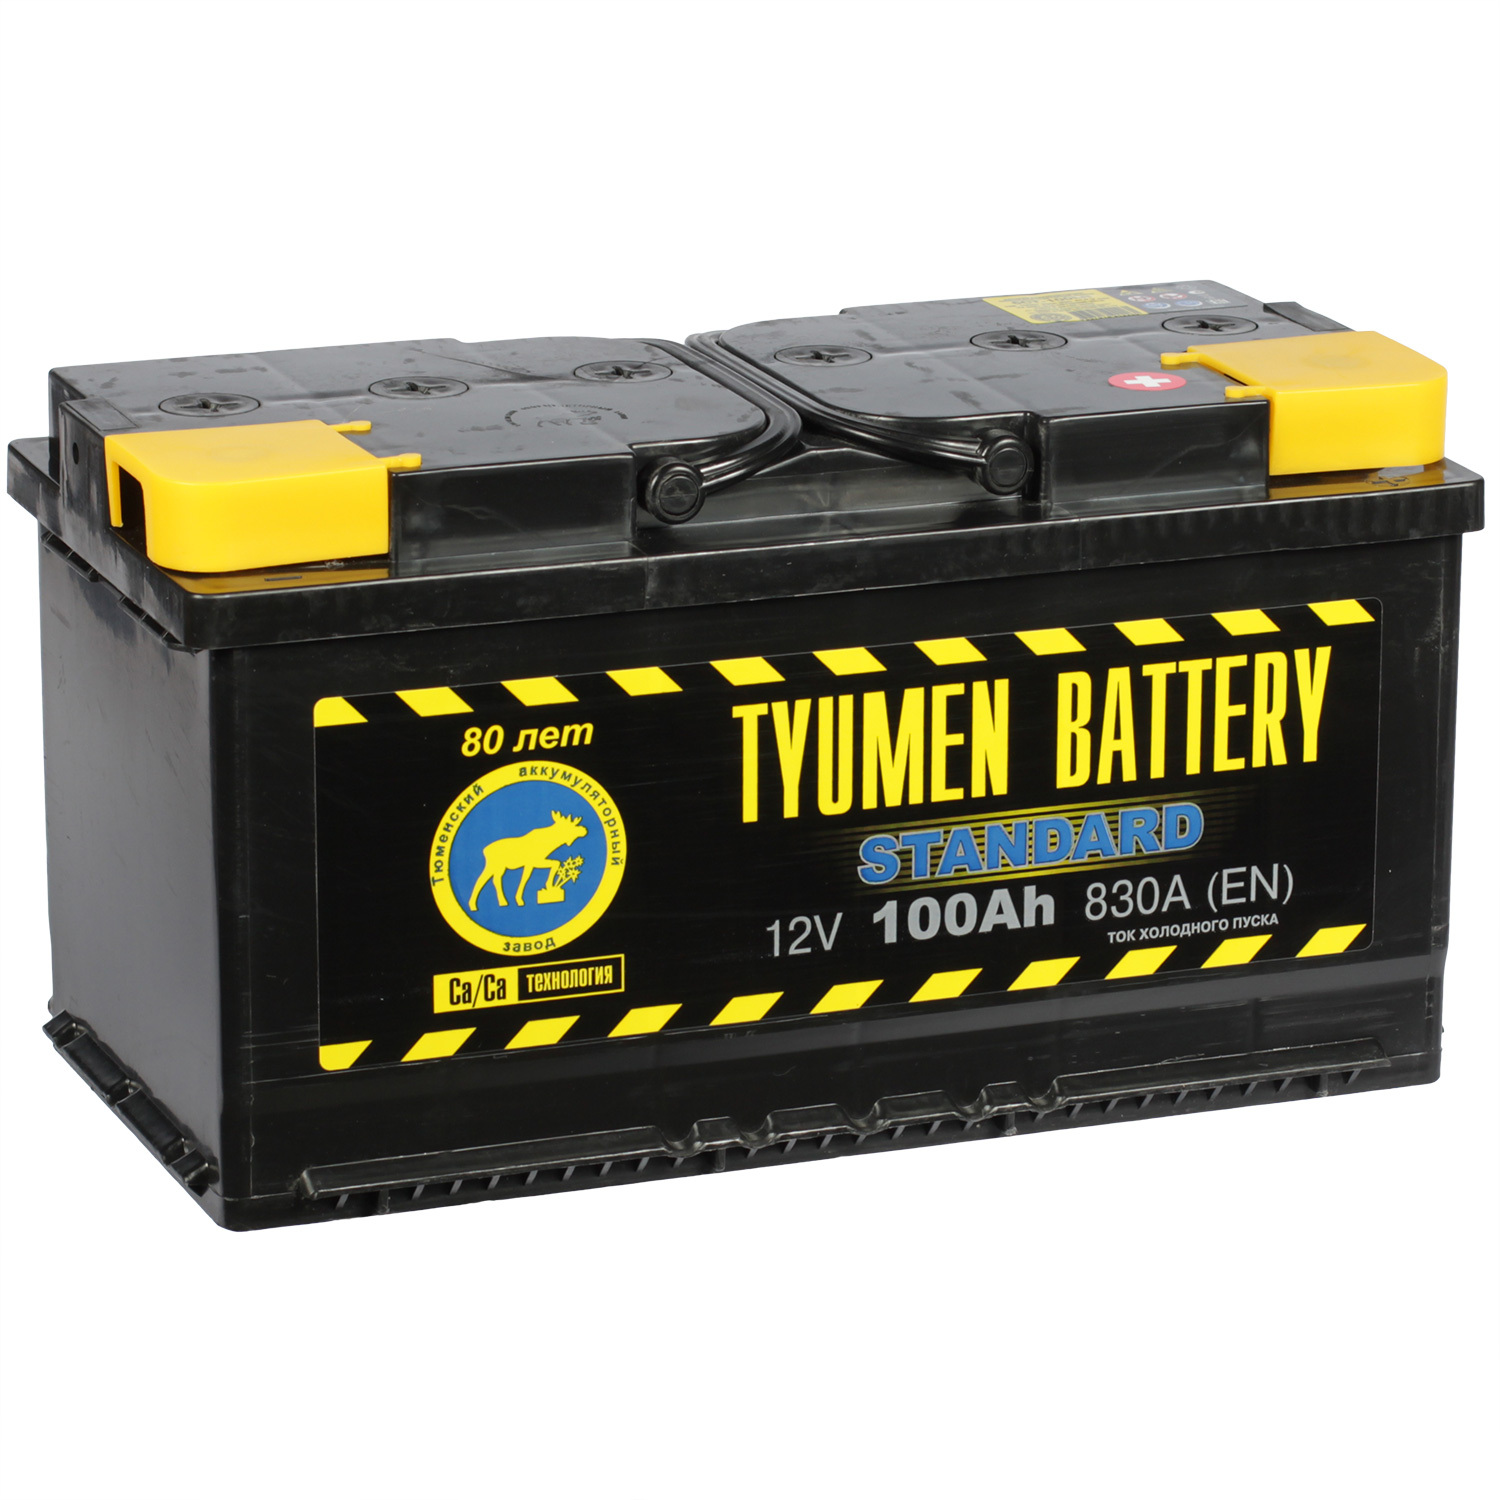 Tyumen Battery Автомобильный аккумулятор Tyumen Battery Standard 100 Ач обратная полярность L5 tyumen battery автомобильный аккумулятор tyumen battery standard 55 ач прямая полярность l2